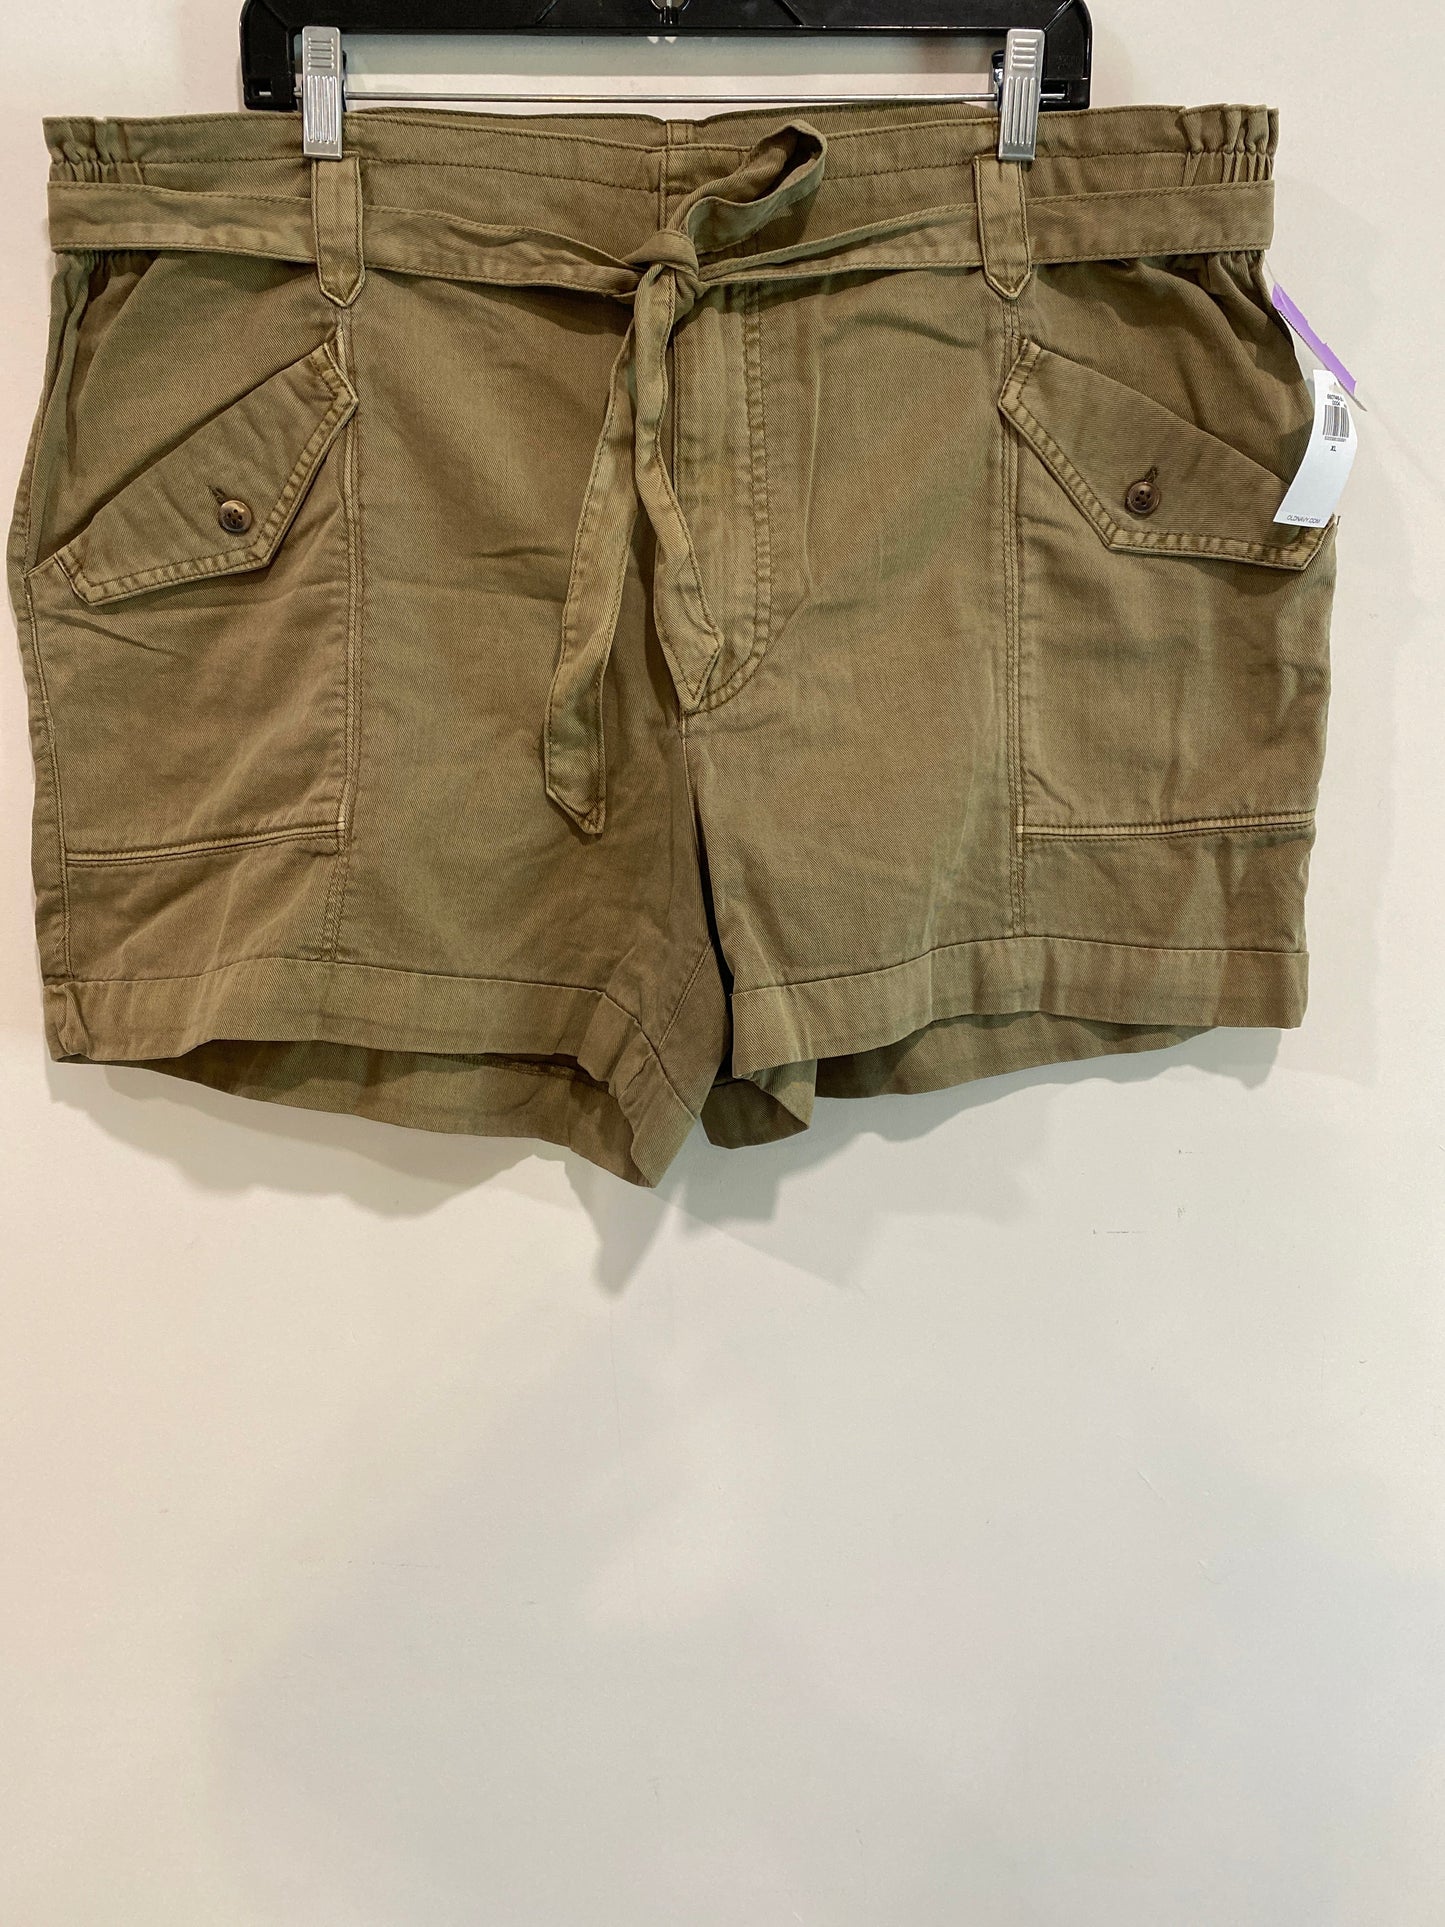 Green Shorts Old Navy, Size Xl